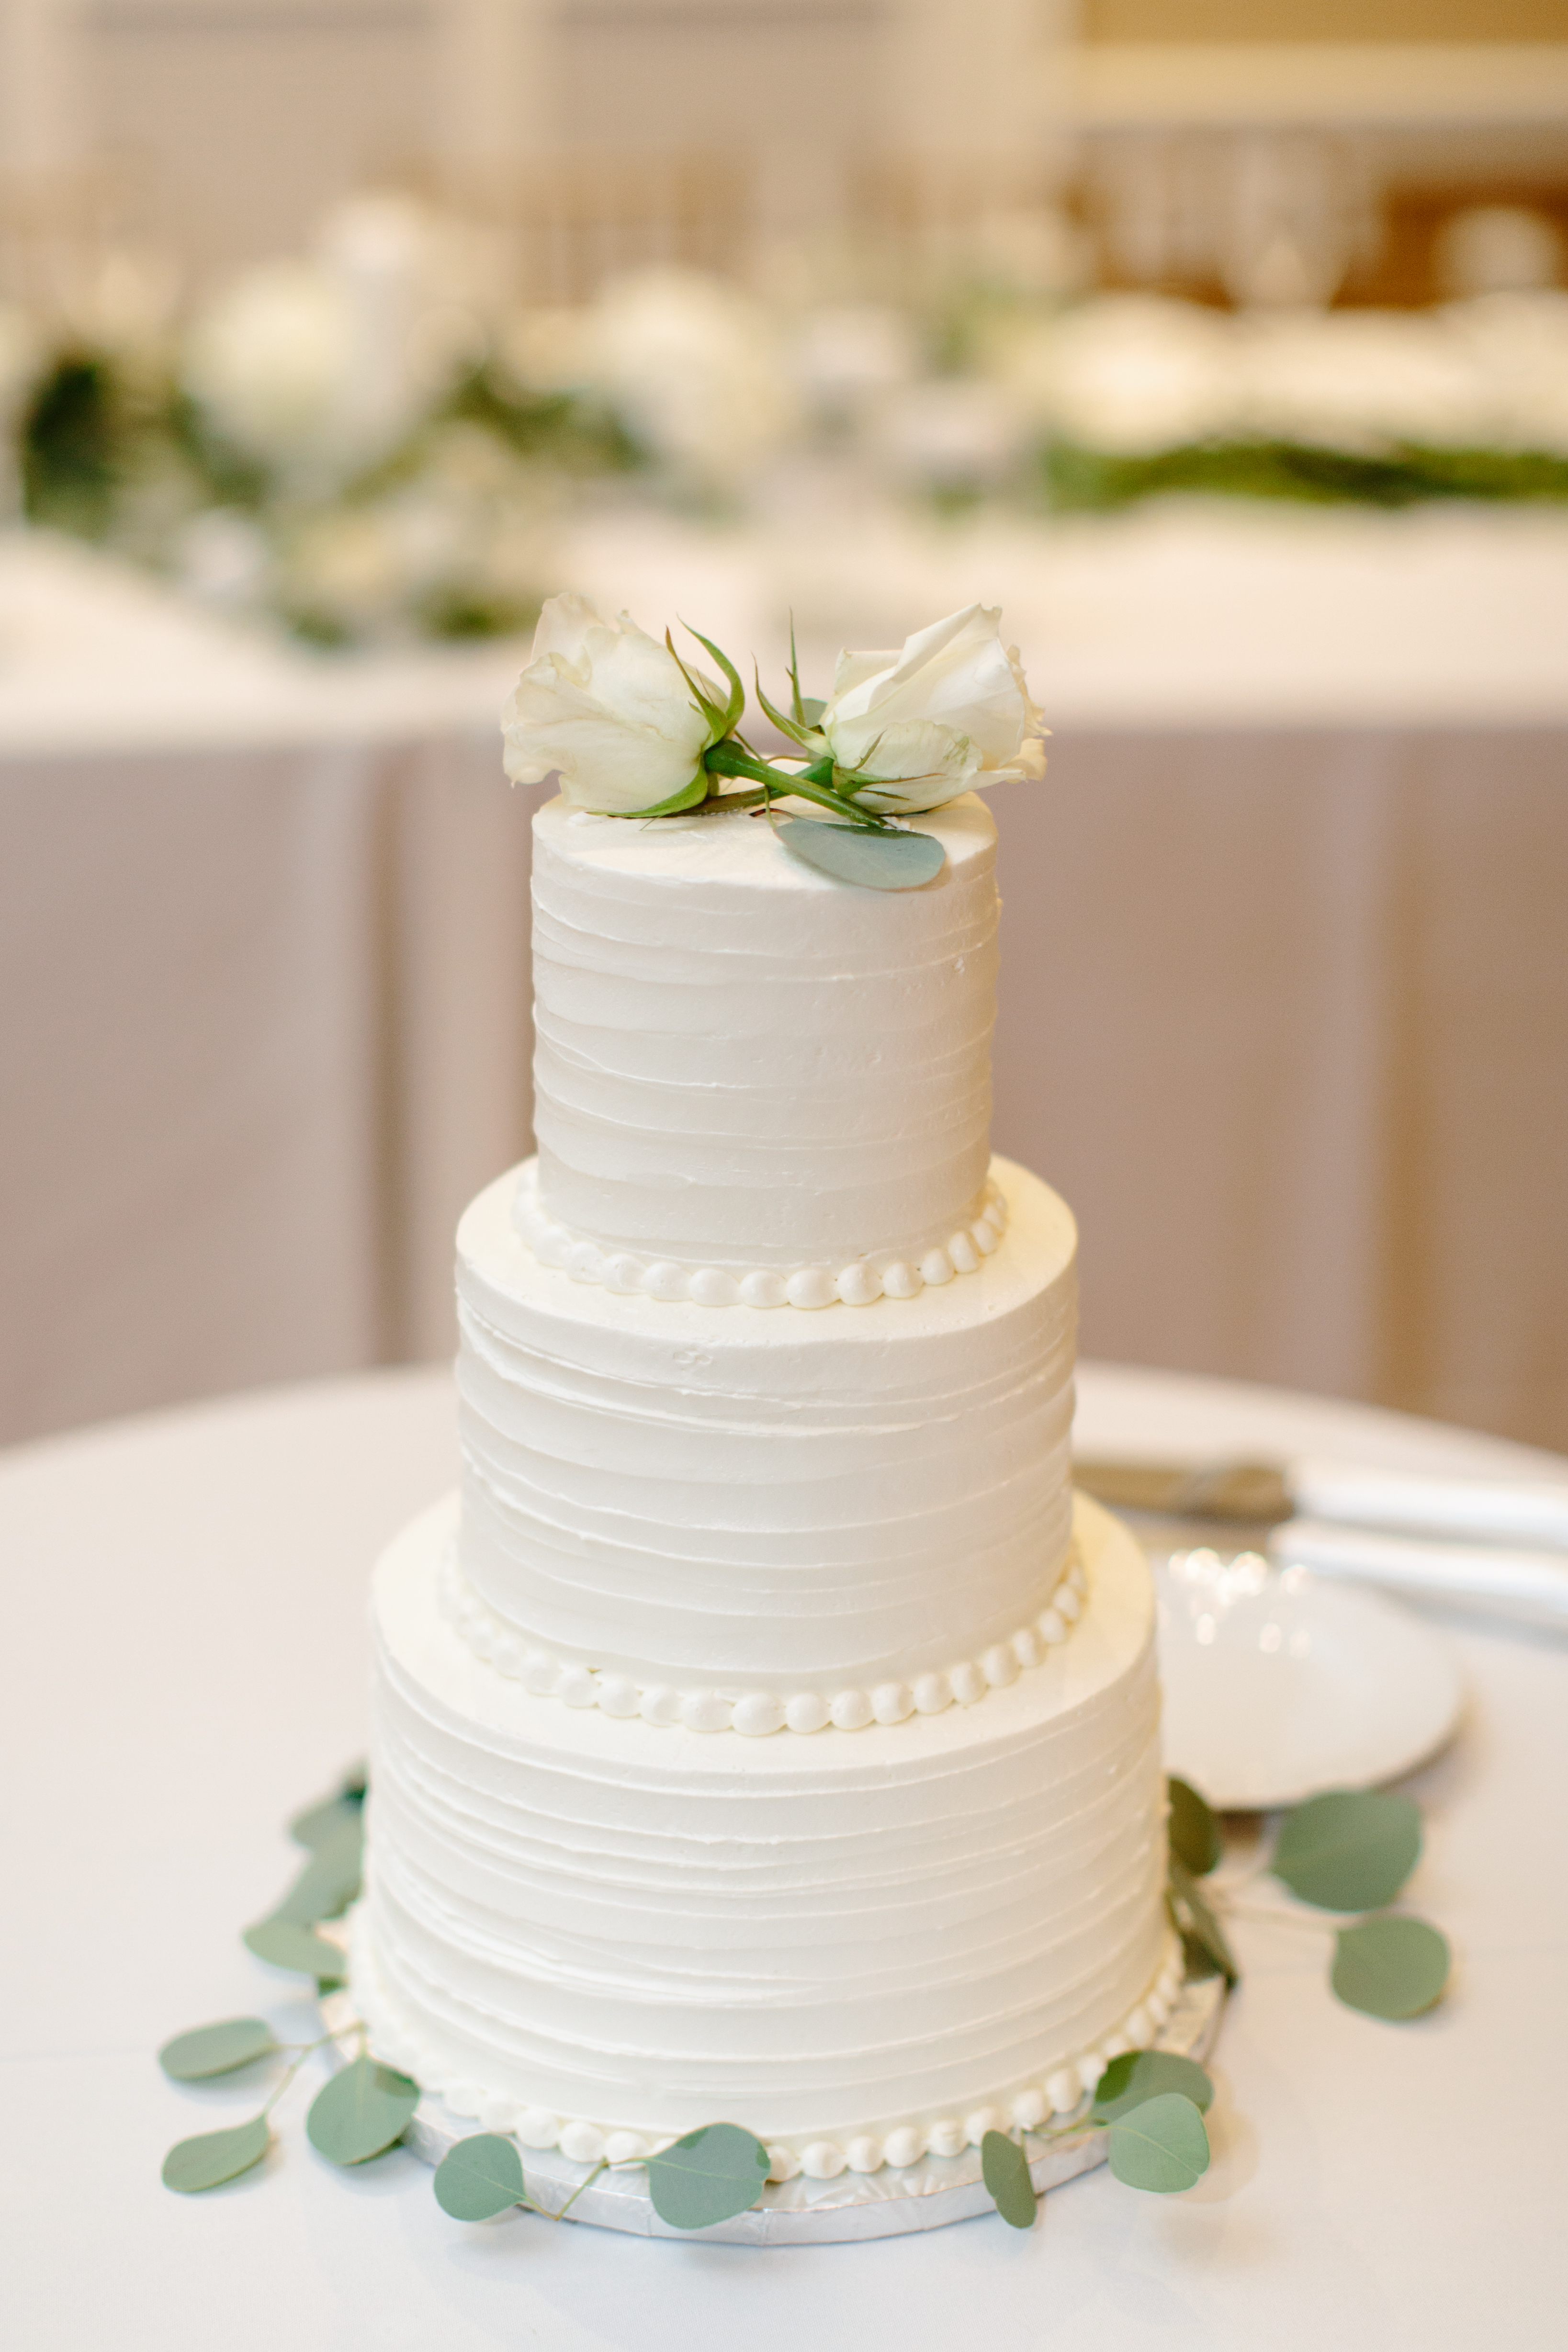 Simple romantic 3 tier white wedding cake